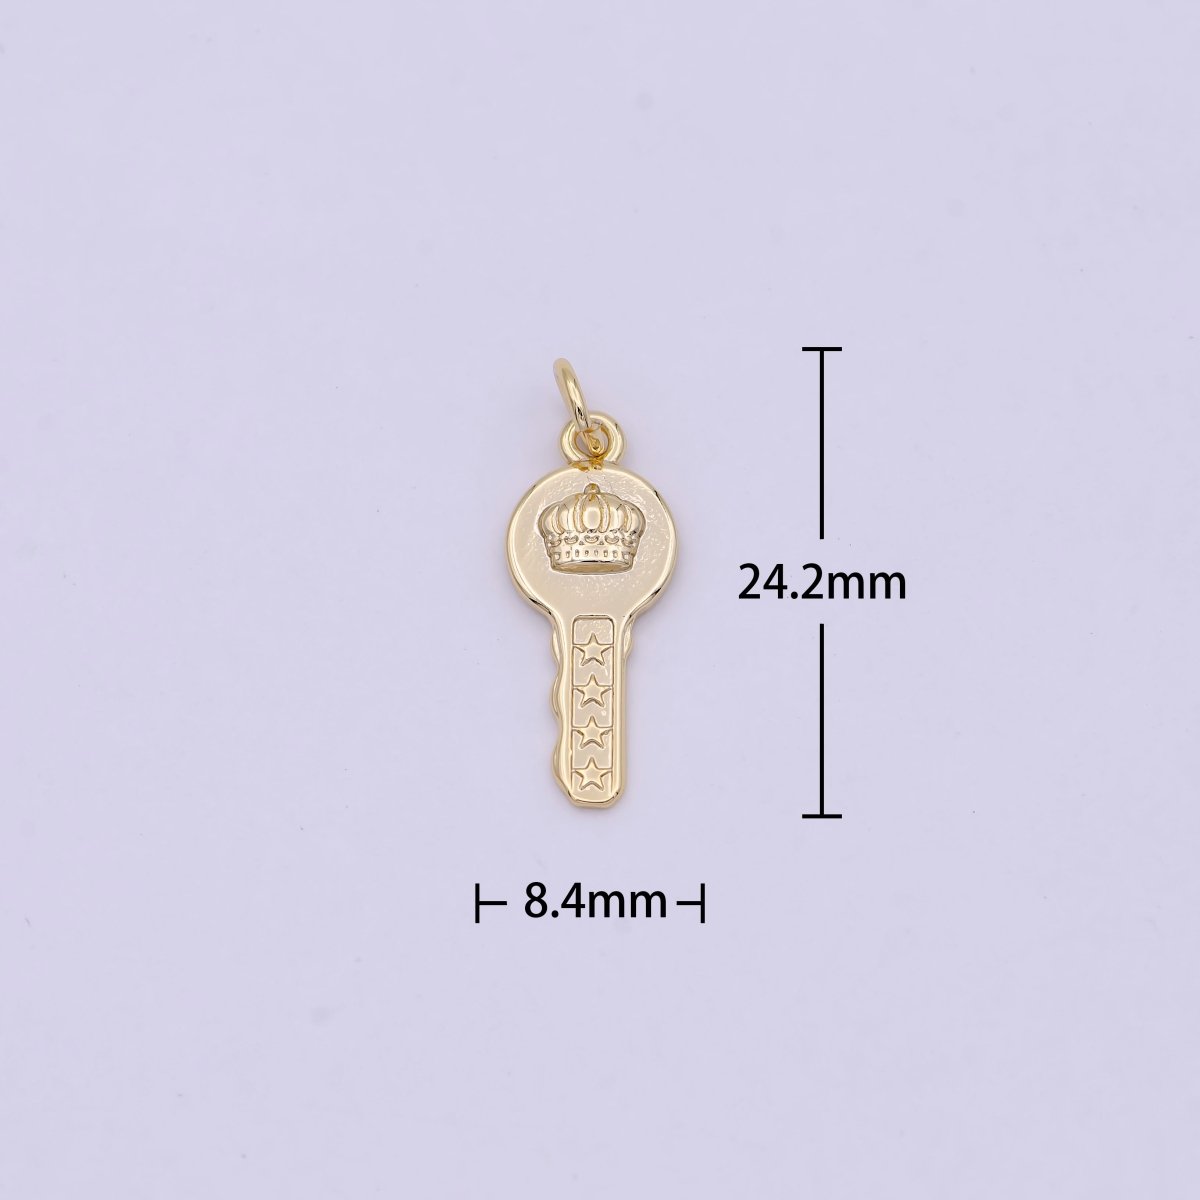 Mini Gold Key Charm with Crown Design N-365 - DLUXCA